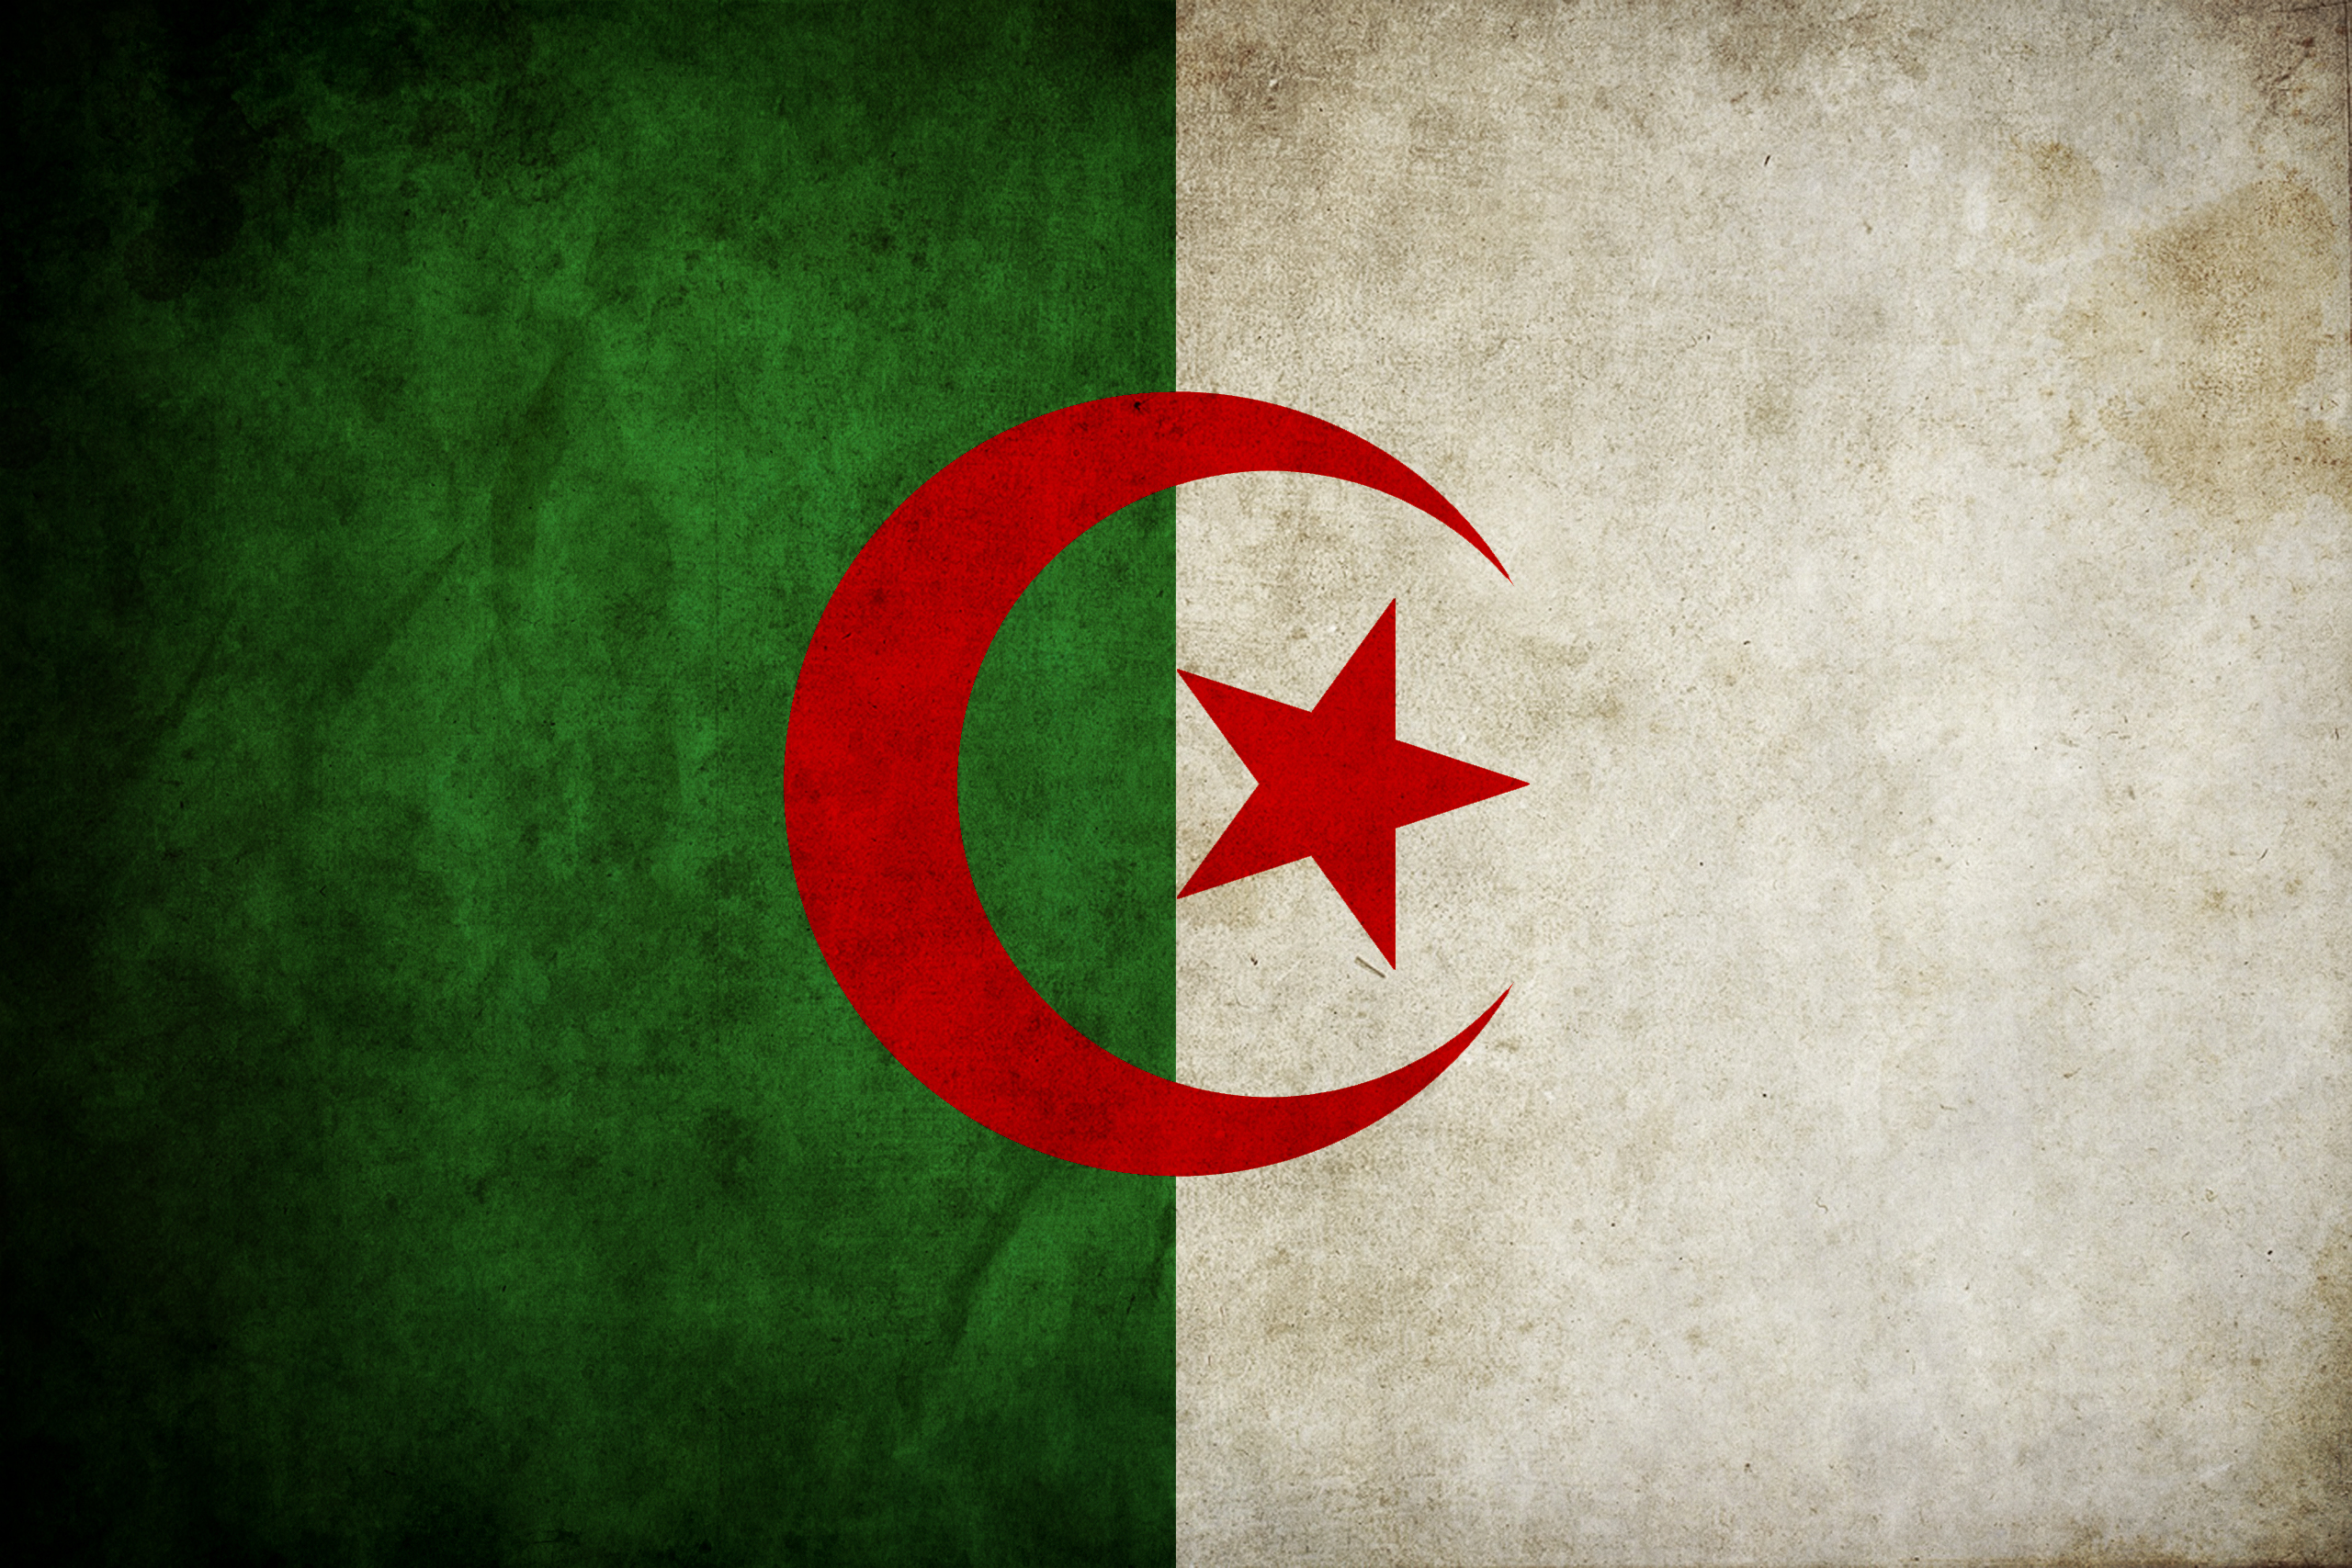 флаги, Алжир - обои на рабочий стол